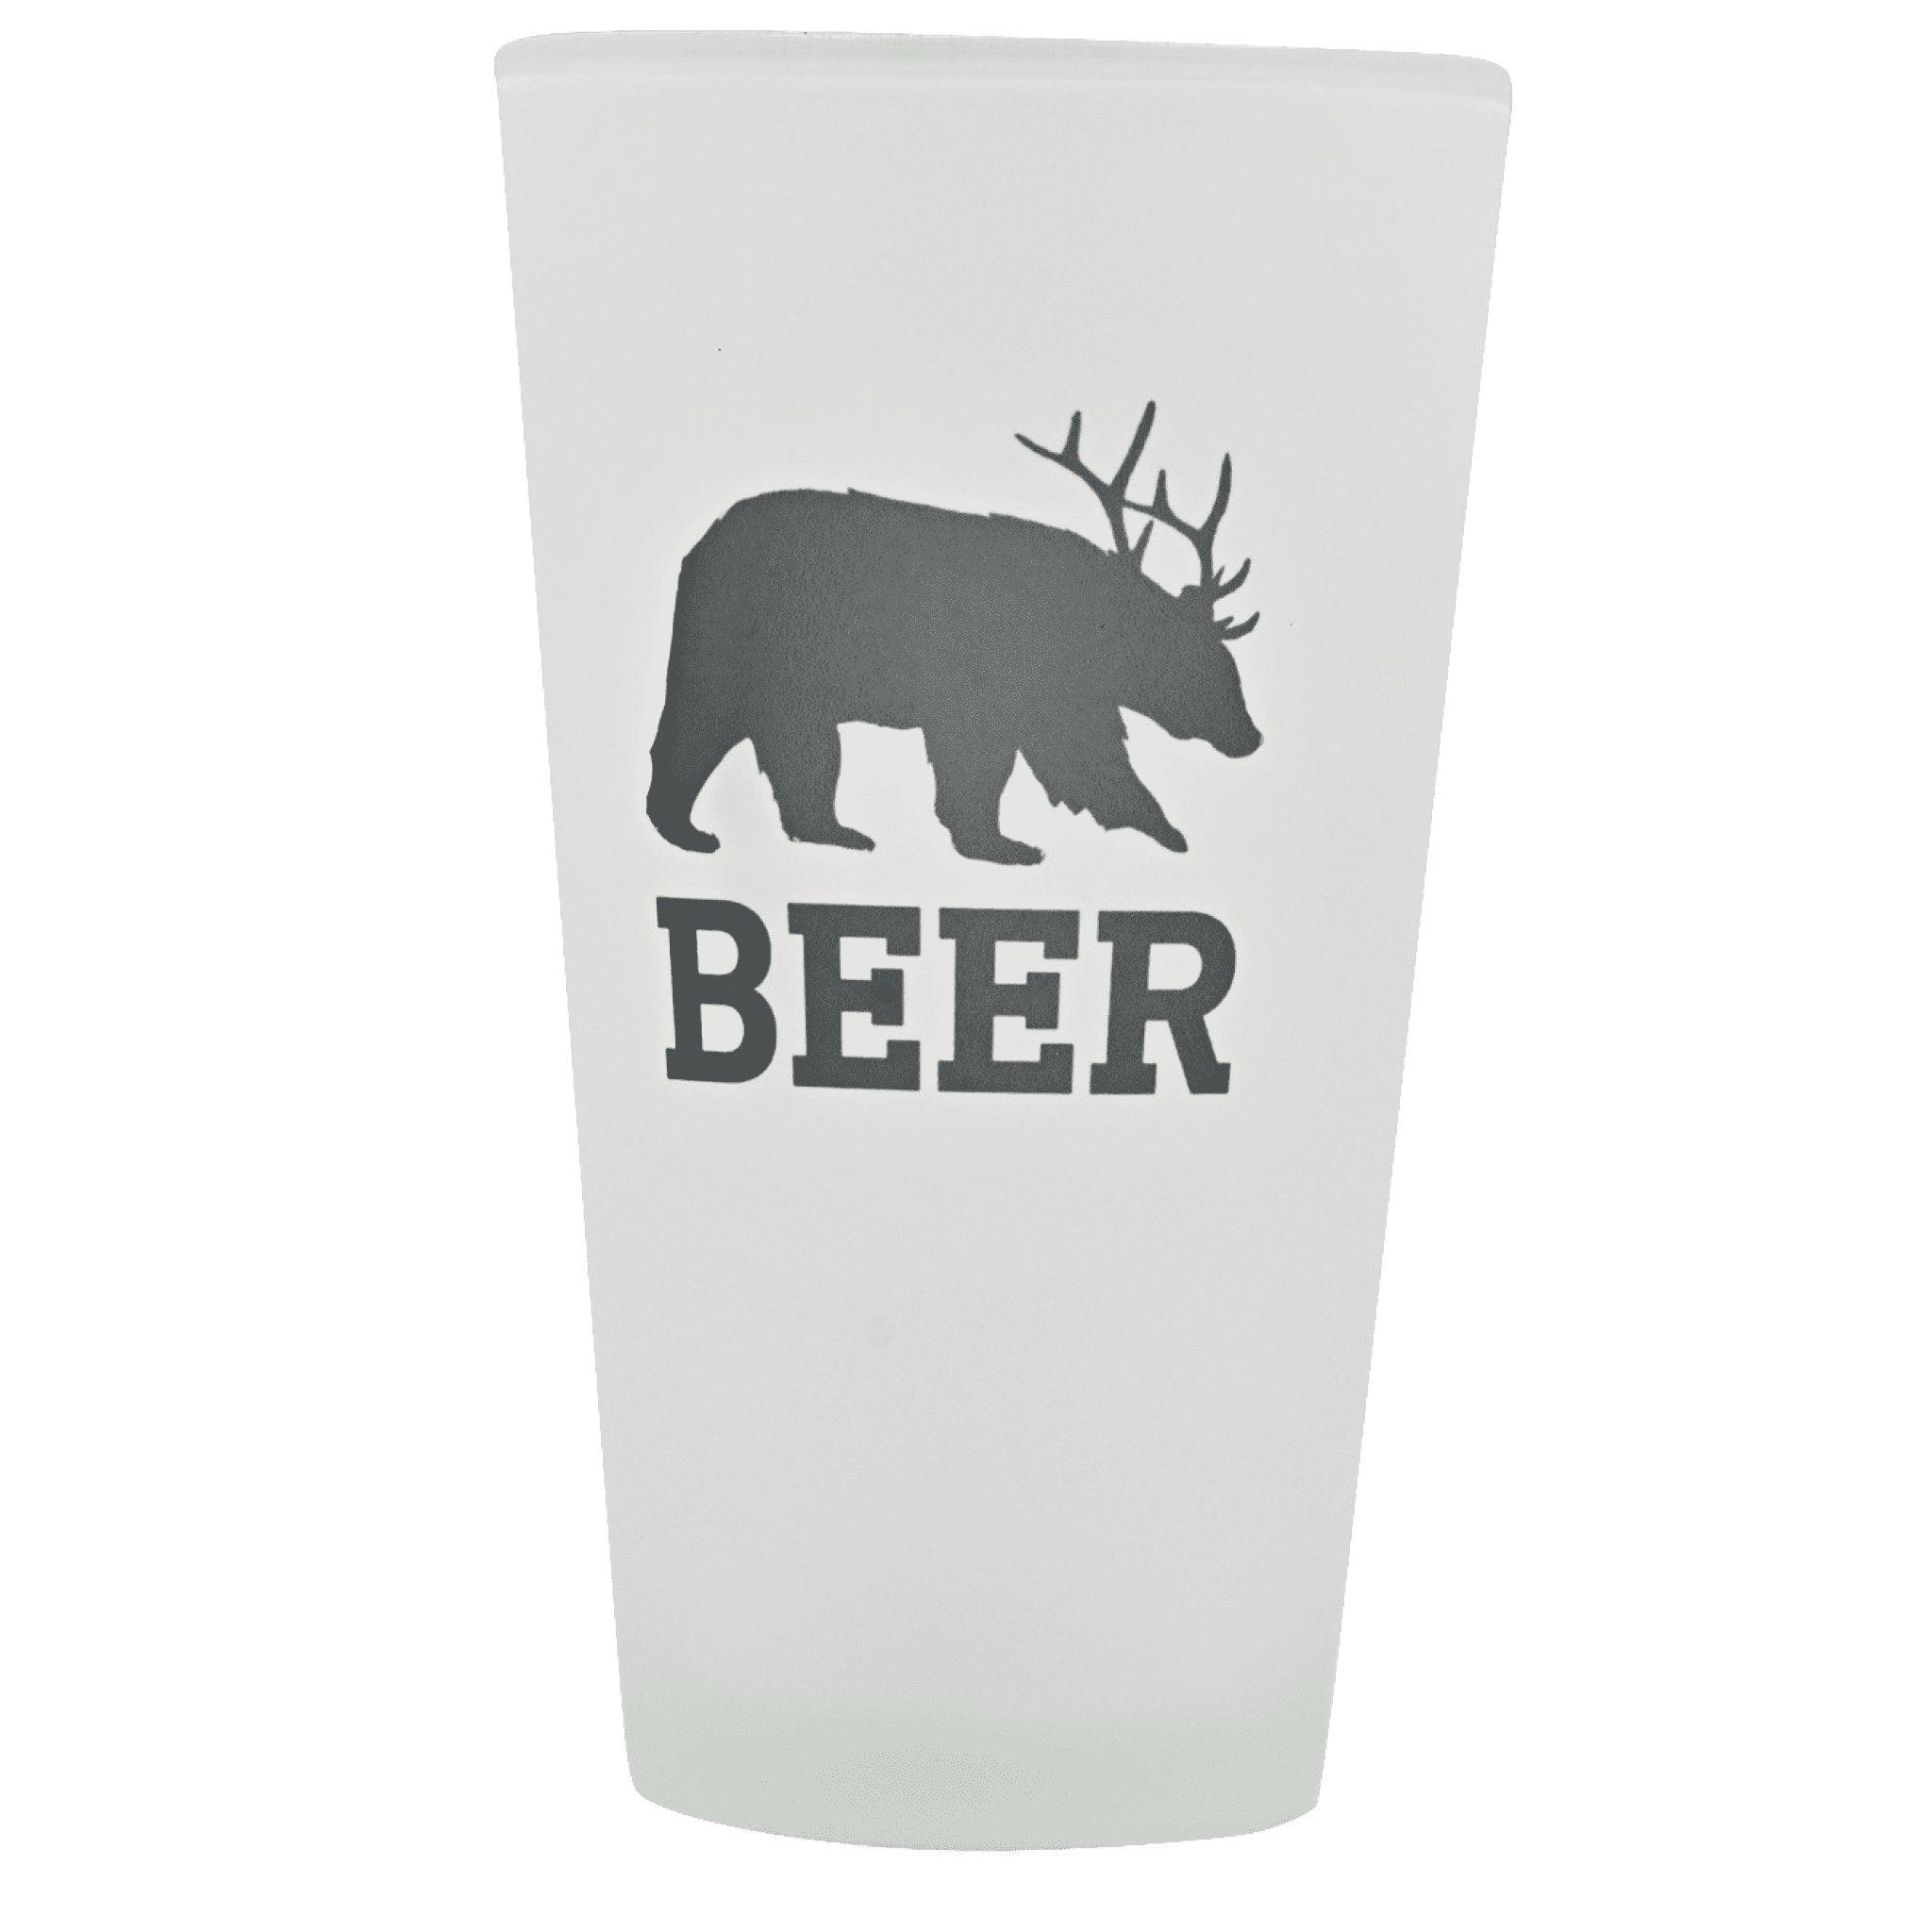 Beer Pint Glass - Matuska Taxidermy Supply Company